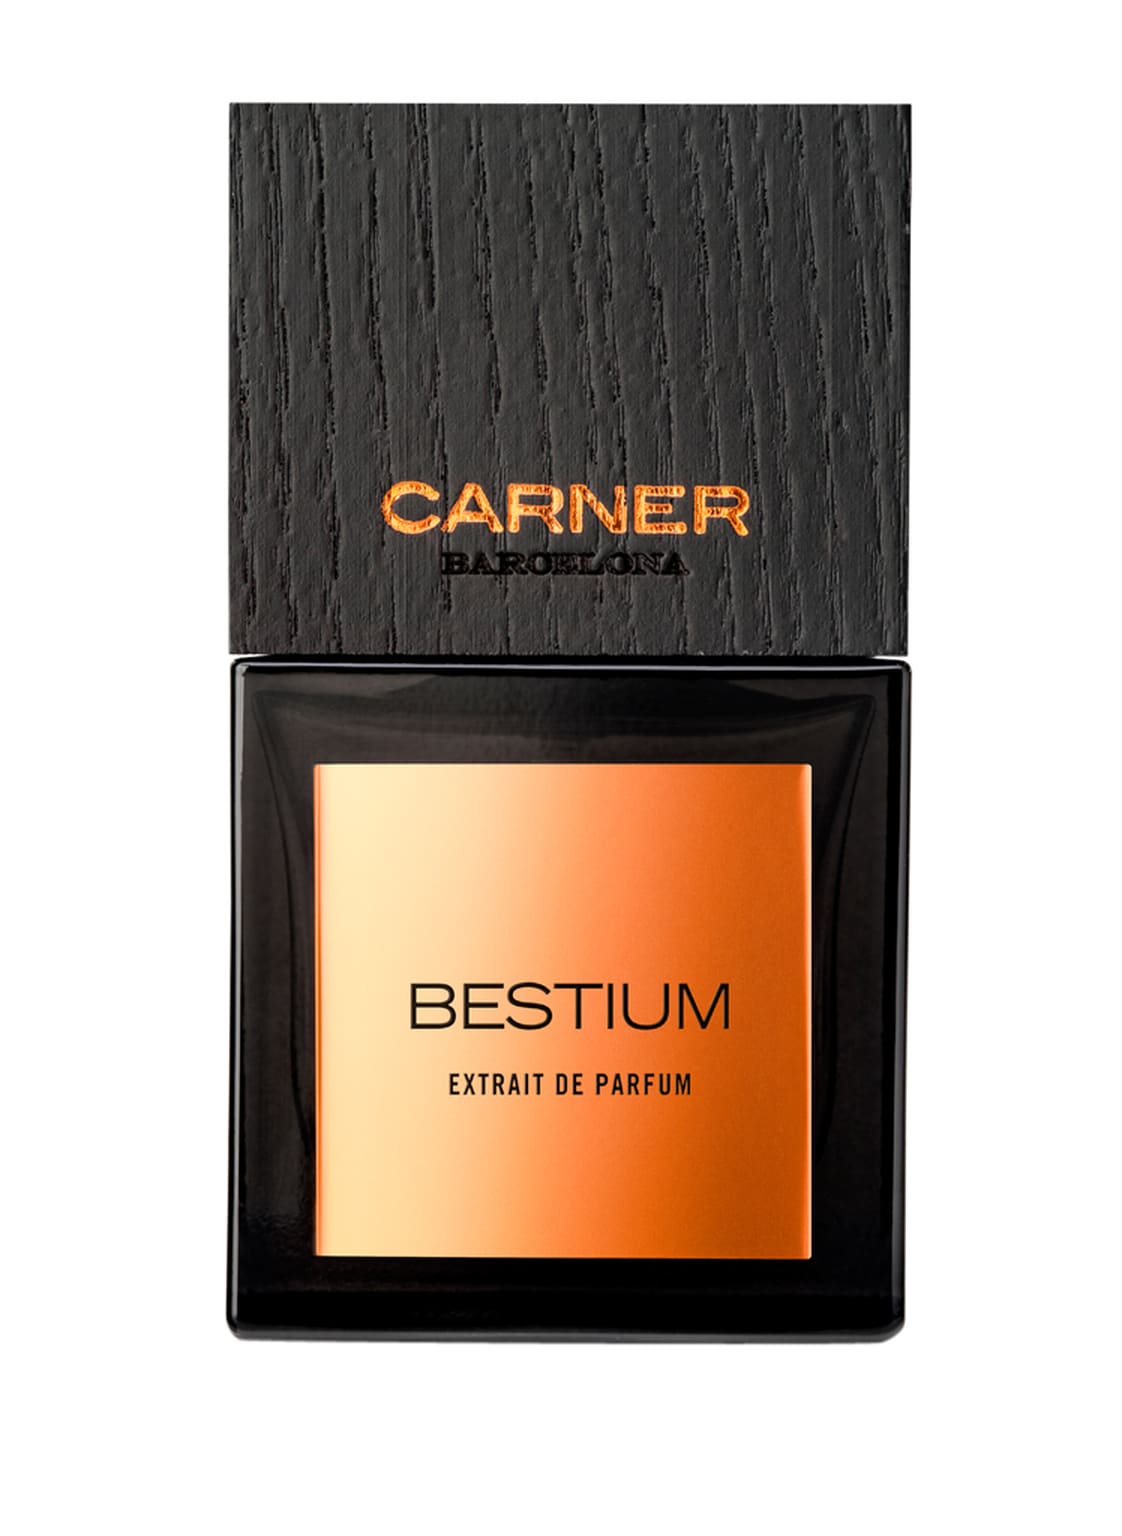 Carner Barcelona Bestium Extrait de Parfum 50 ml von CARNER BARCELONA